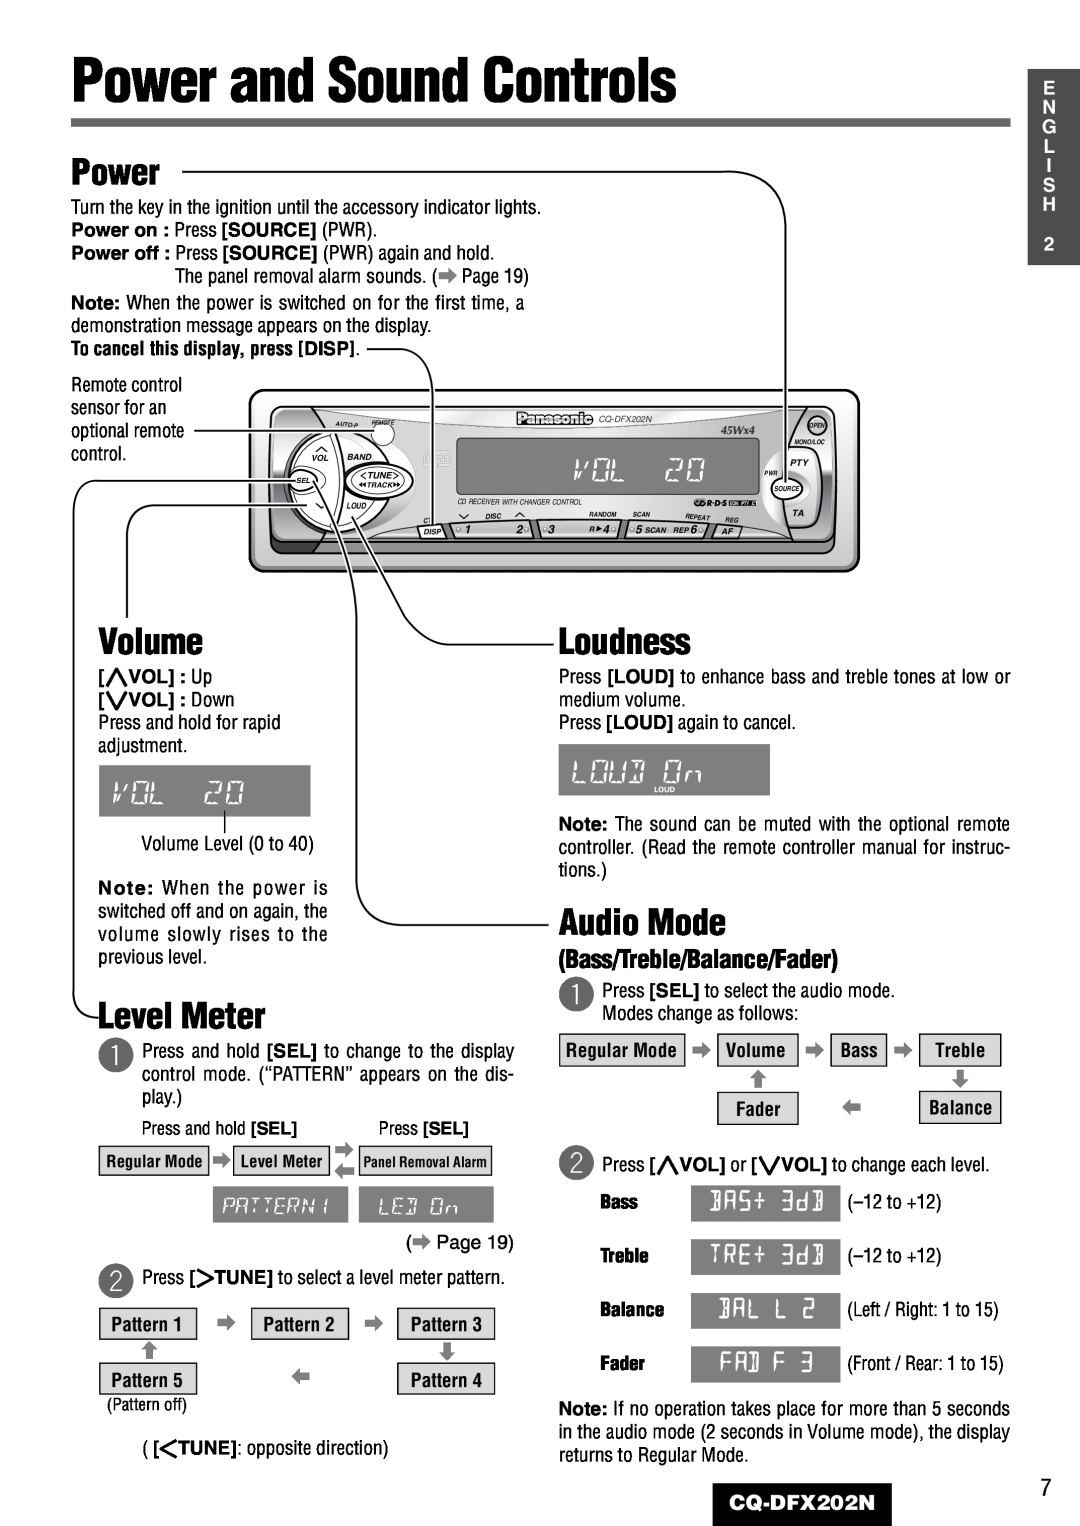 Panasonic CQ-DFX202N Power and Sound Controls, Volume, Level Meter, Loudness, Audio Mode, Bass/Treble/Balance/Fader, Bal L 